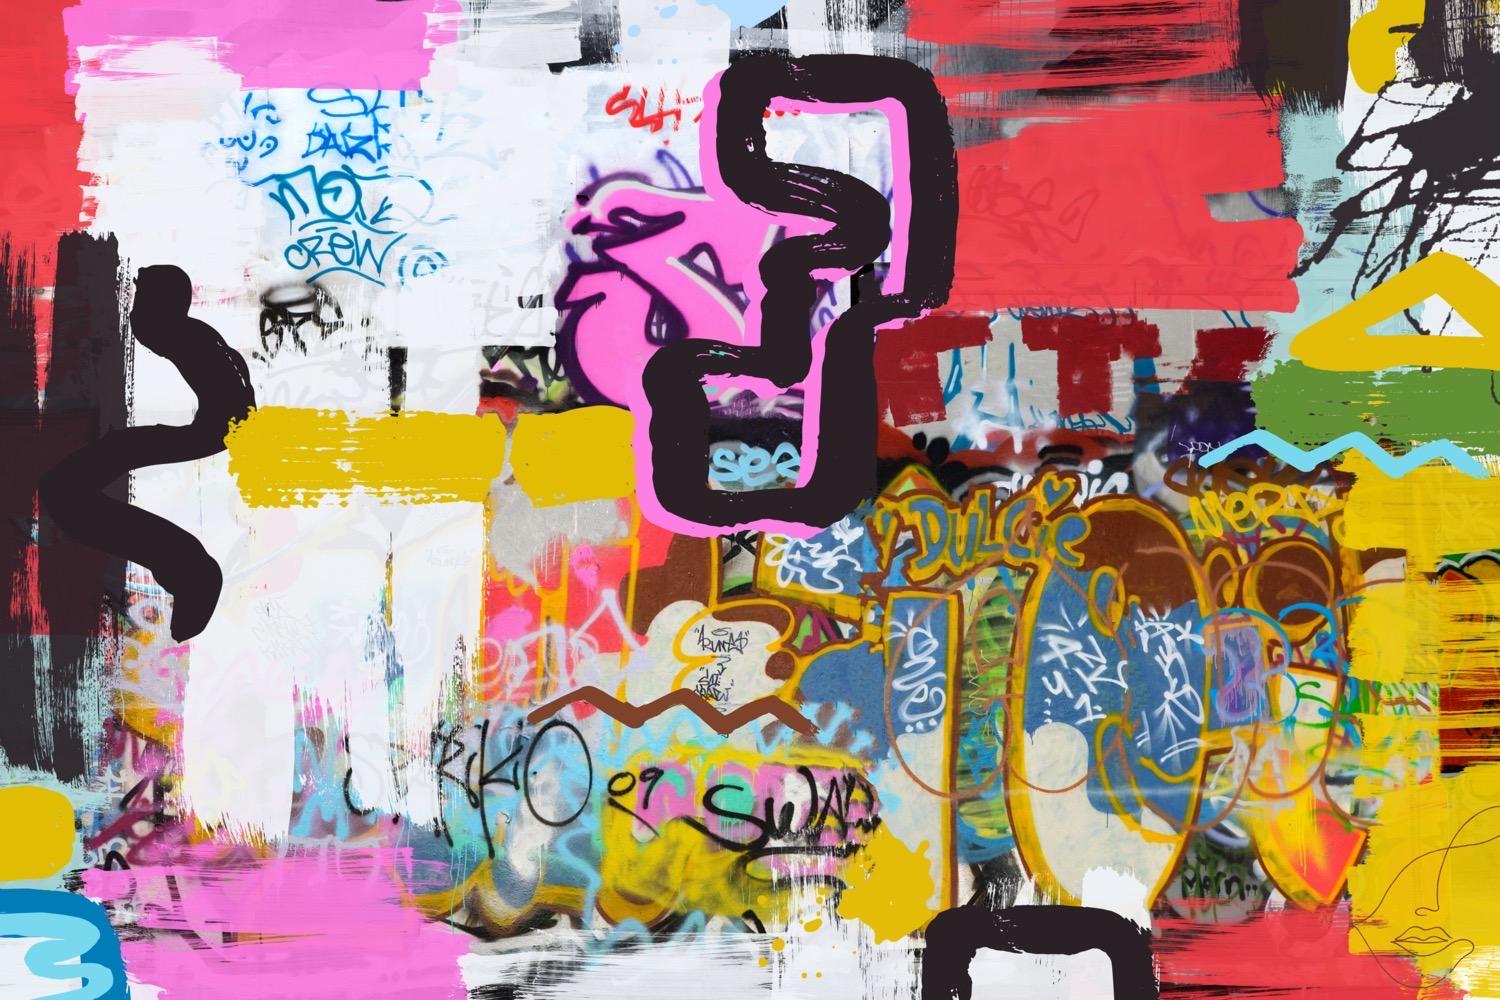 Pink Graffiti Street Art Mixed Media on Canvas, An improvisational Style  45X60